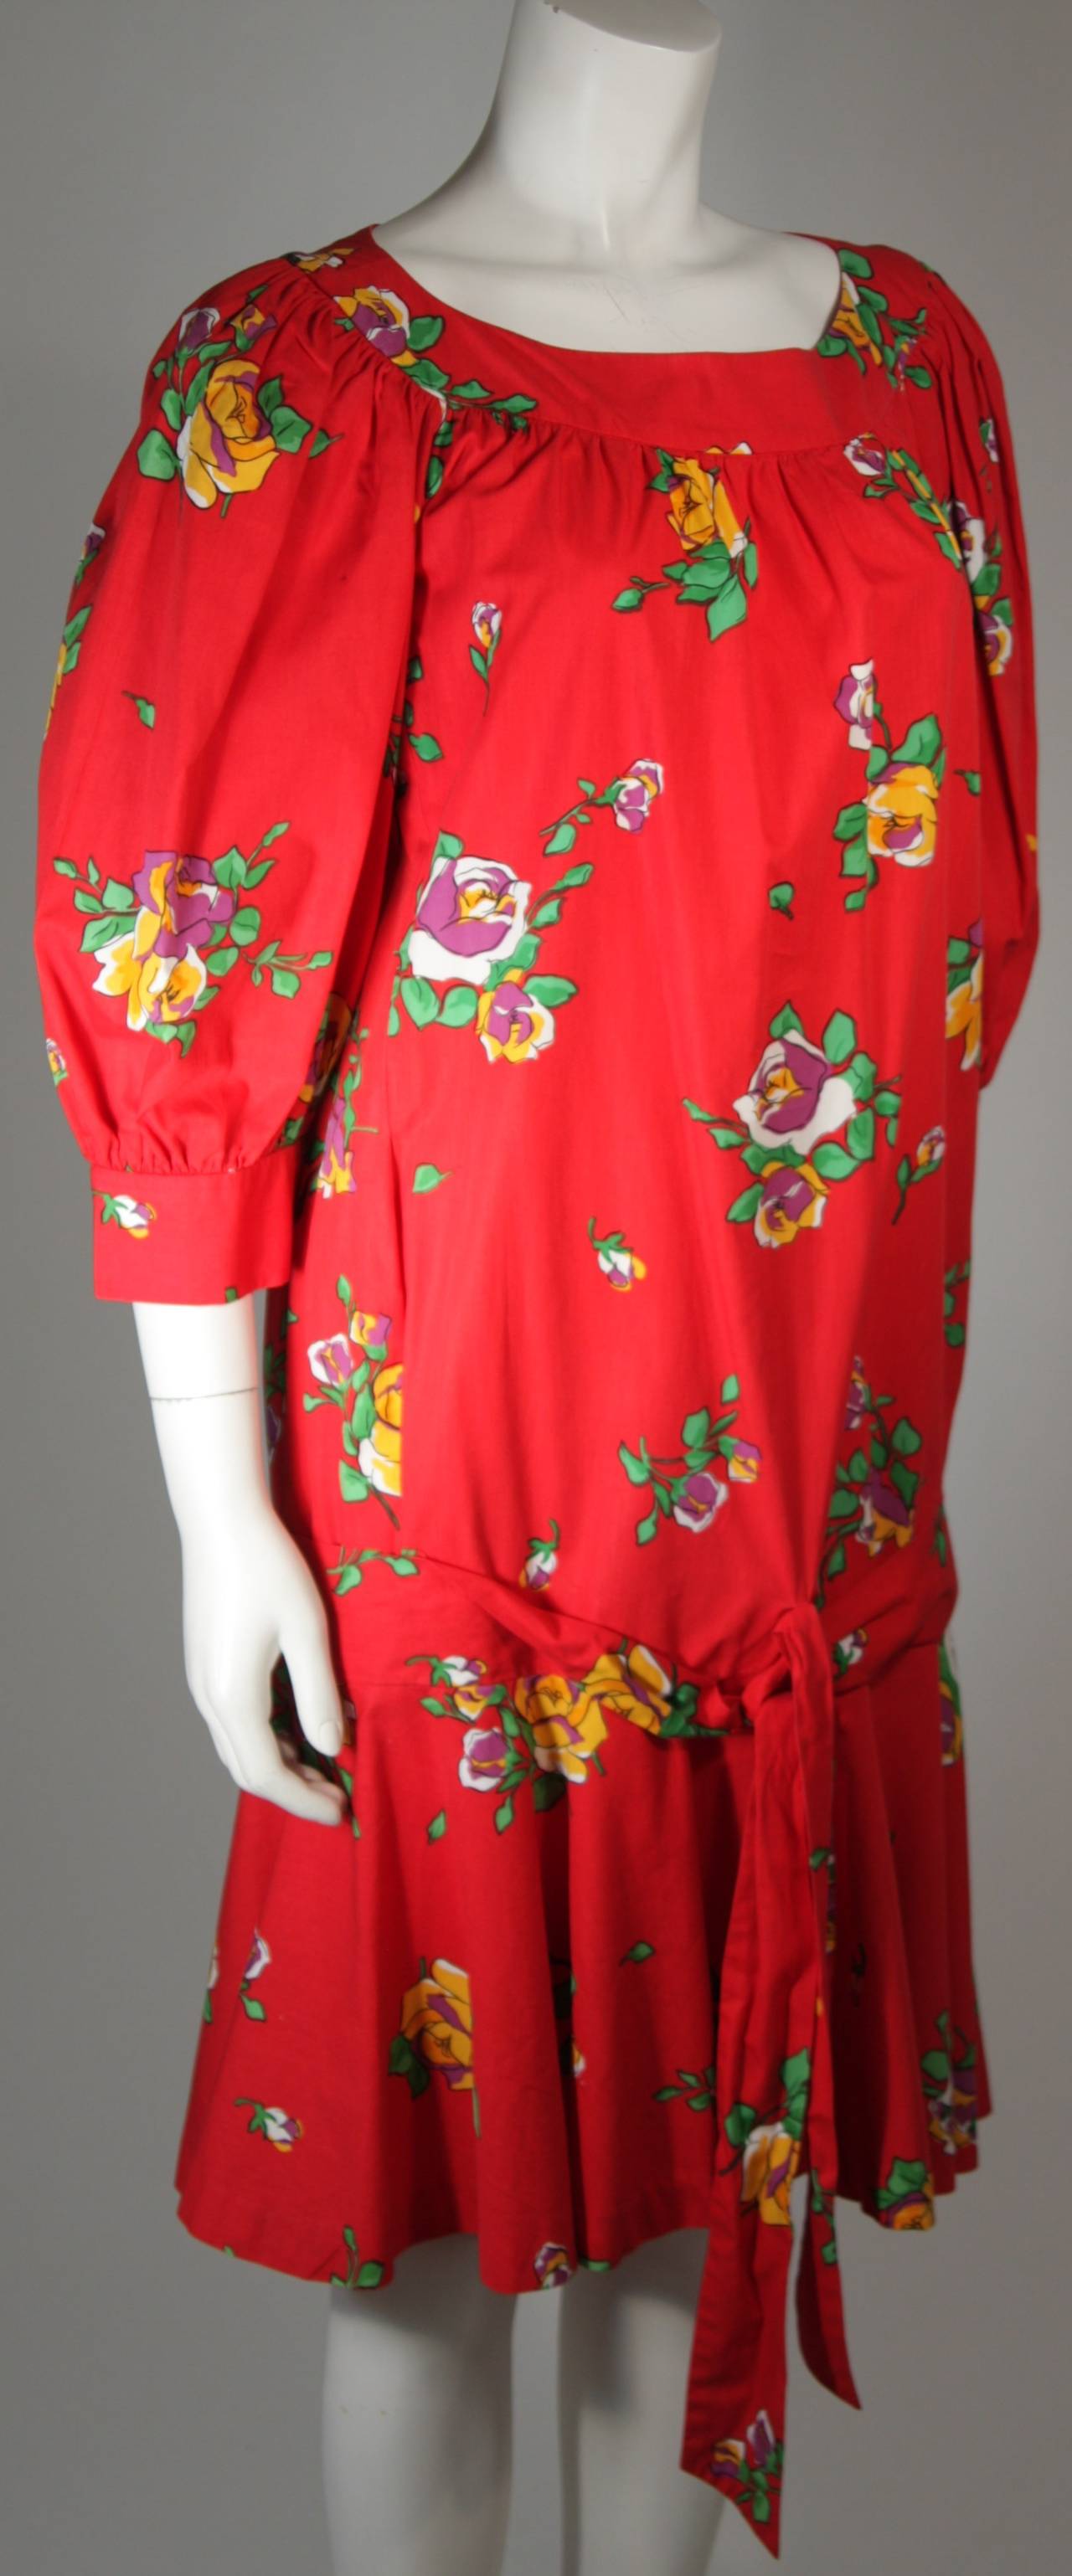 Yves Saint Laurent Red Cotton Drop Waist Dress with Floral Motif Size 36 For Sale 1